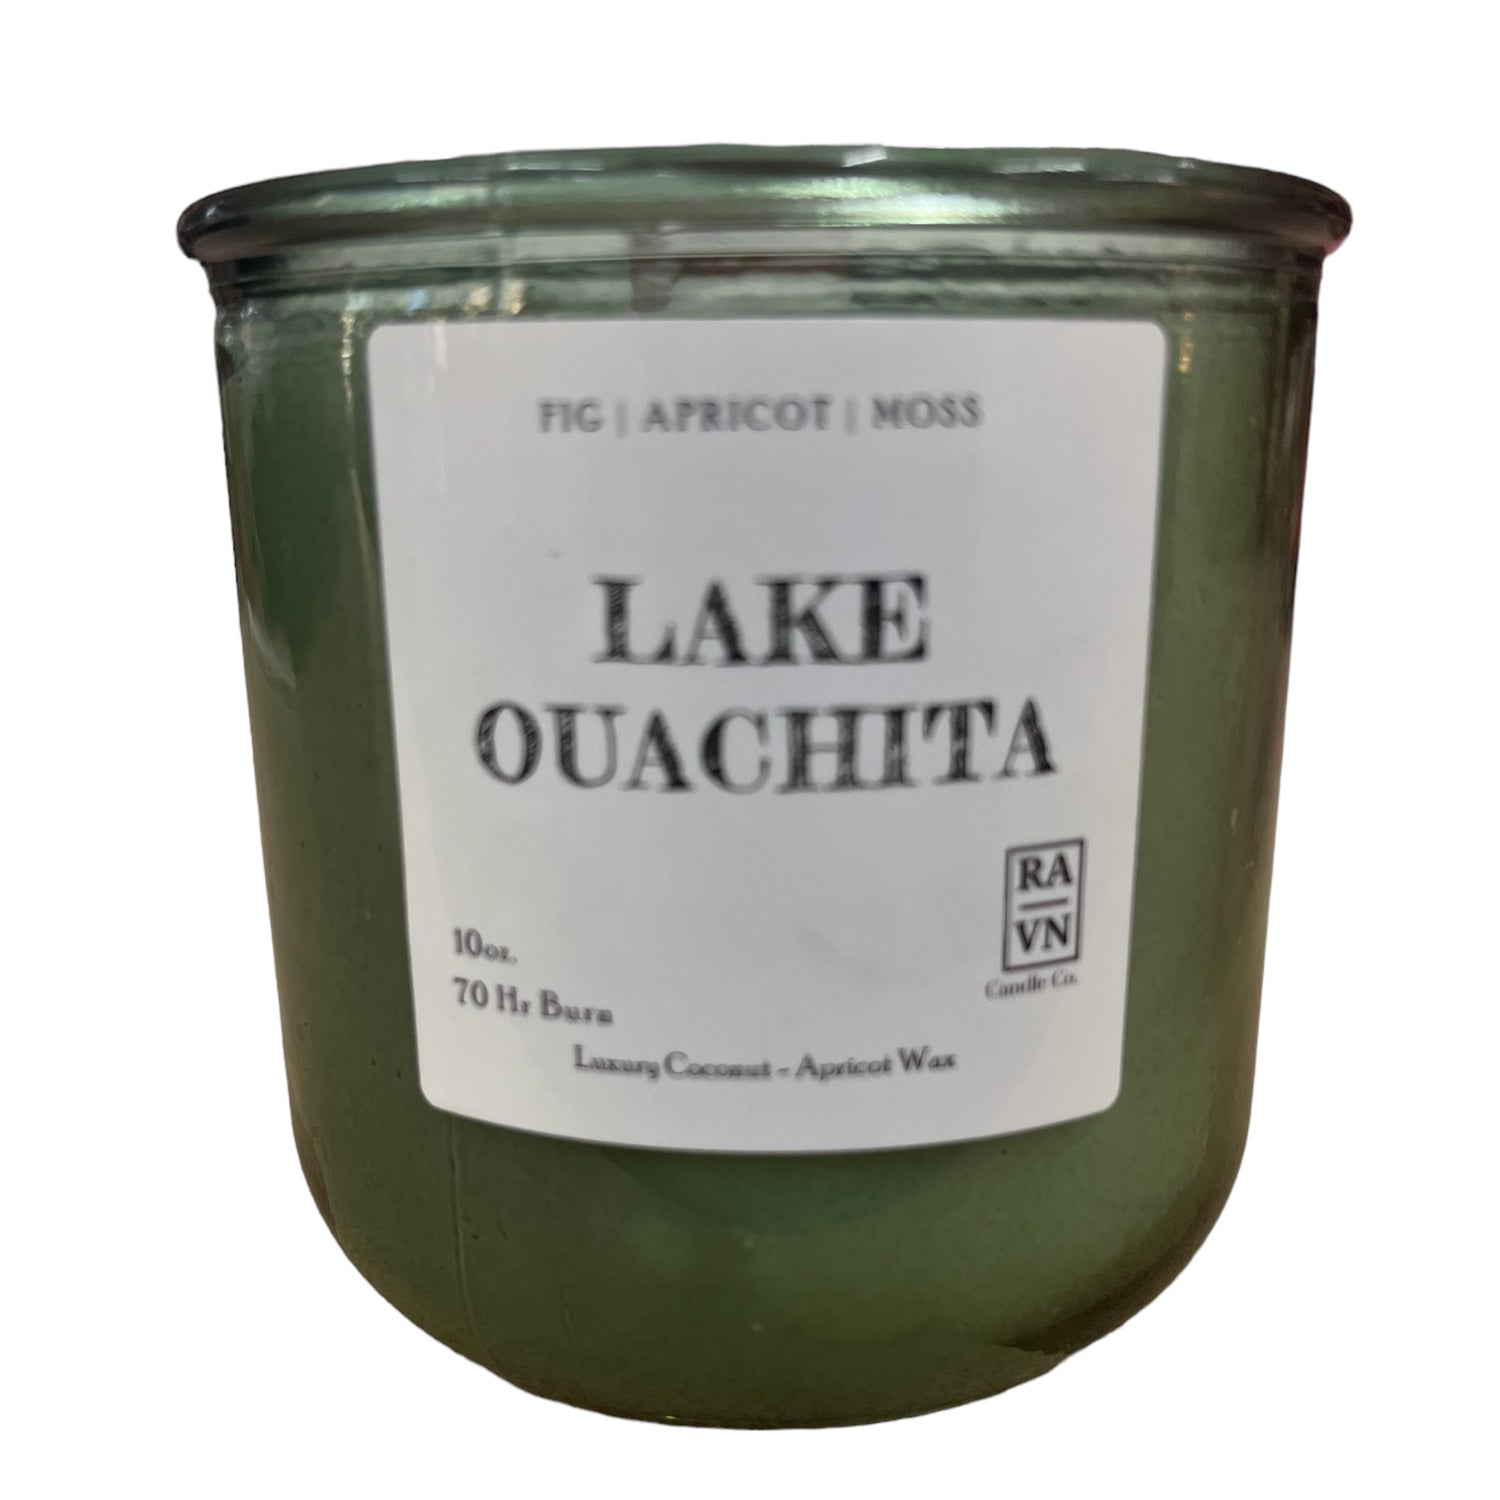 Lake Ouachita Candle